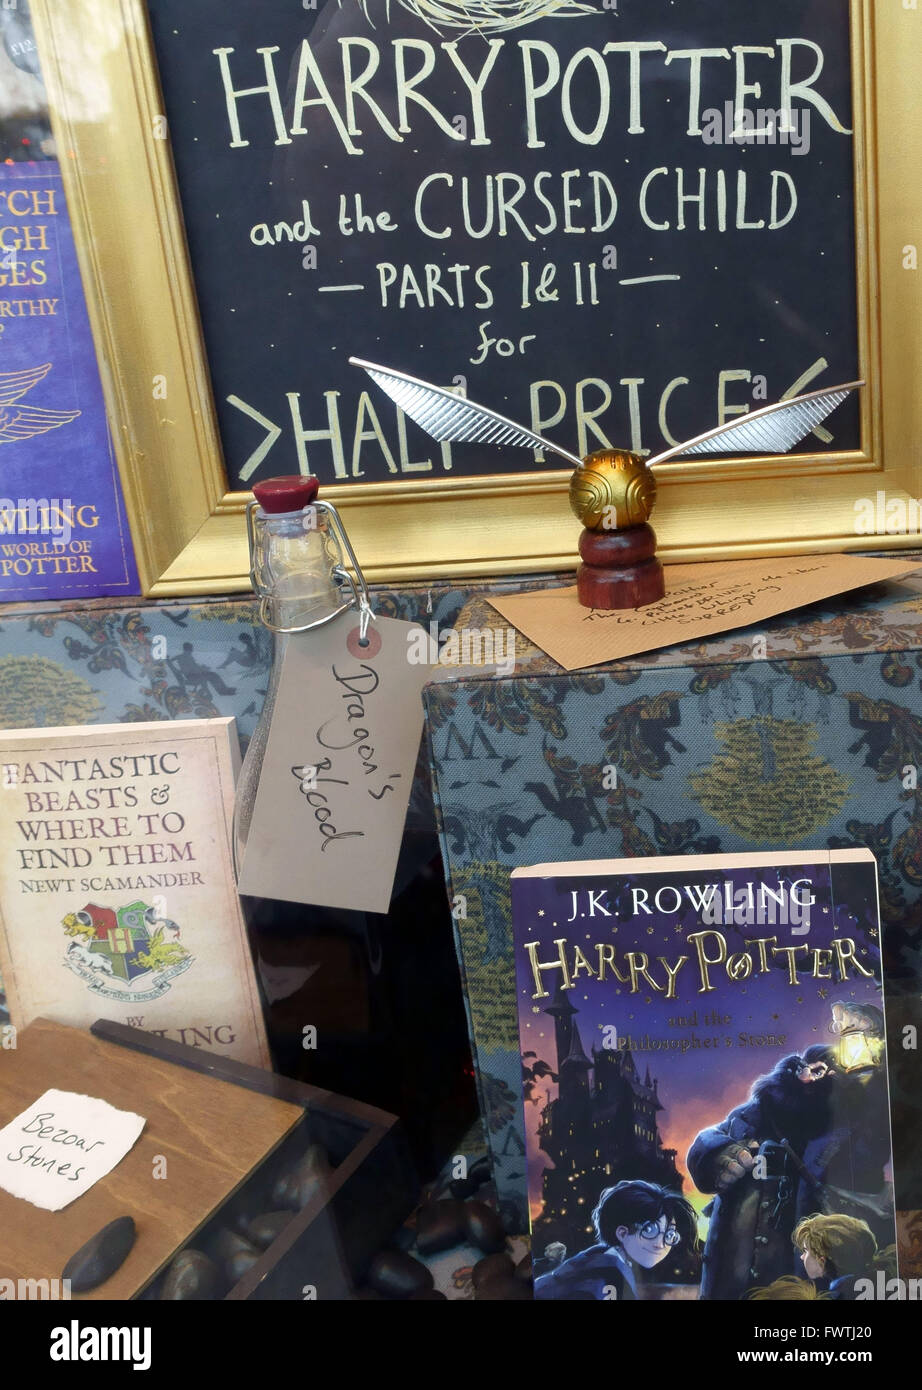 Harry Potter anzeigen in London Buchladen Fenster Stockfotografie - Alamy